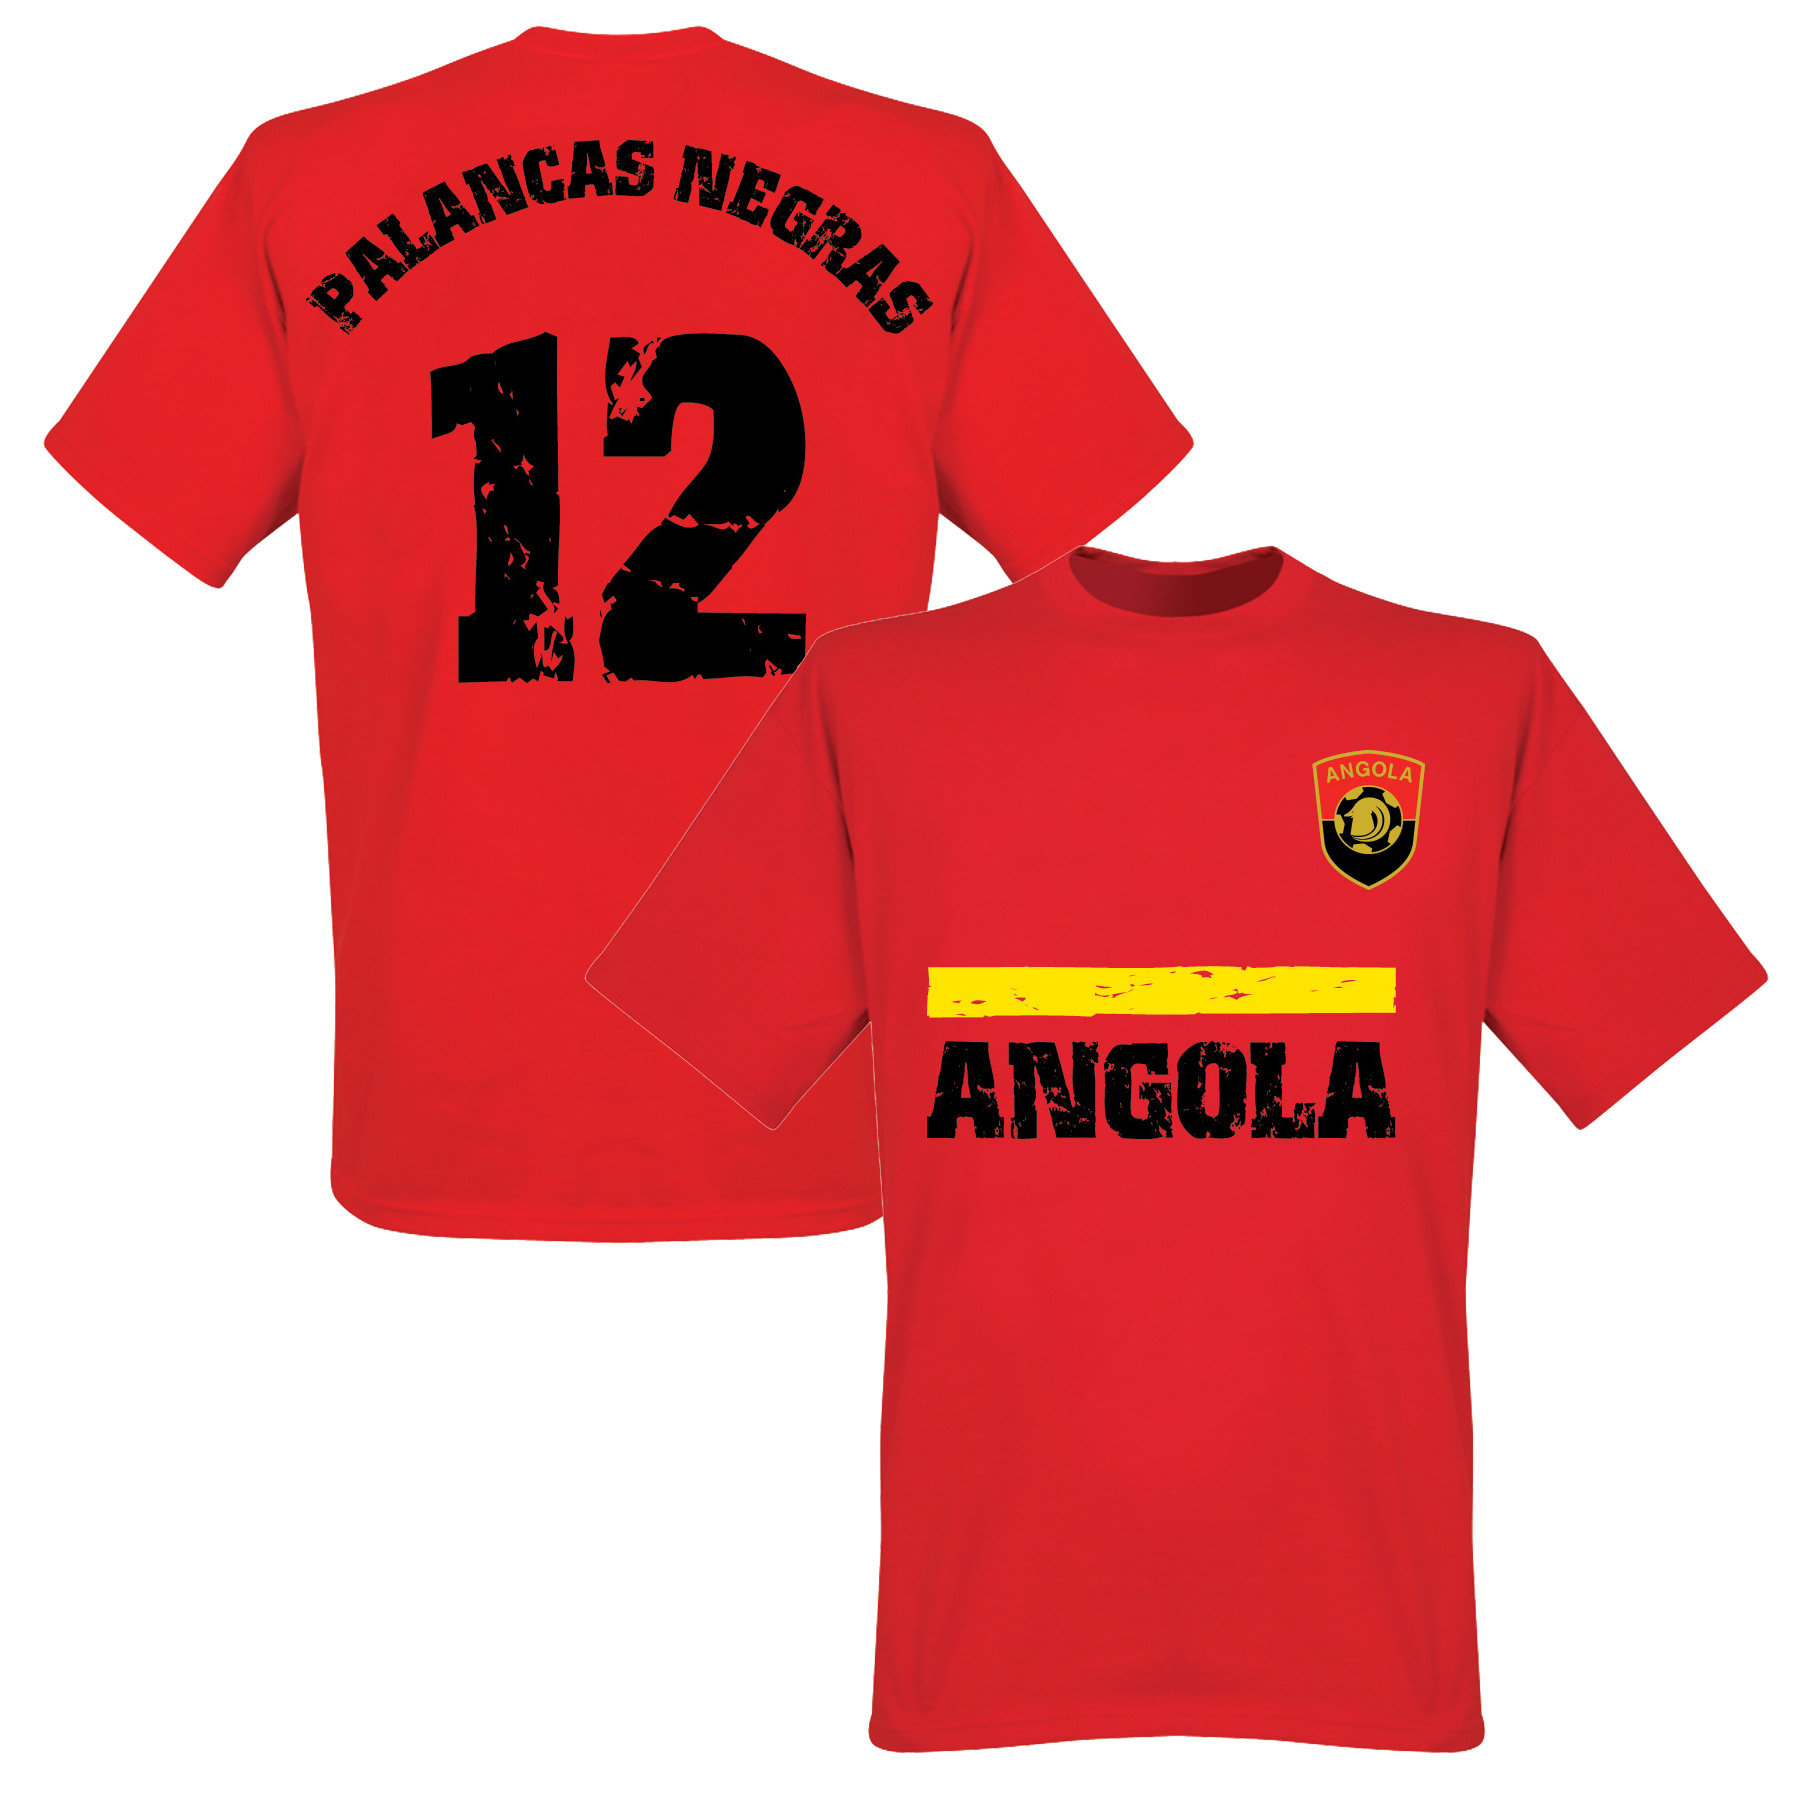 Angola Team T-Shirt